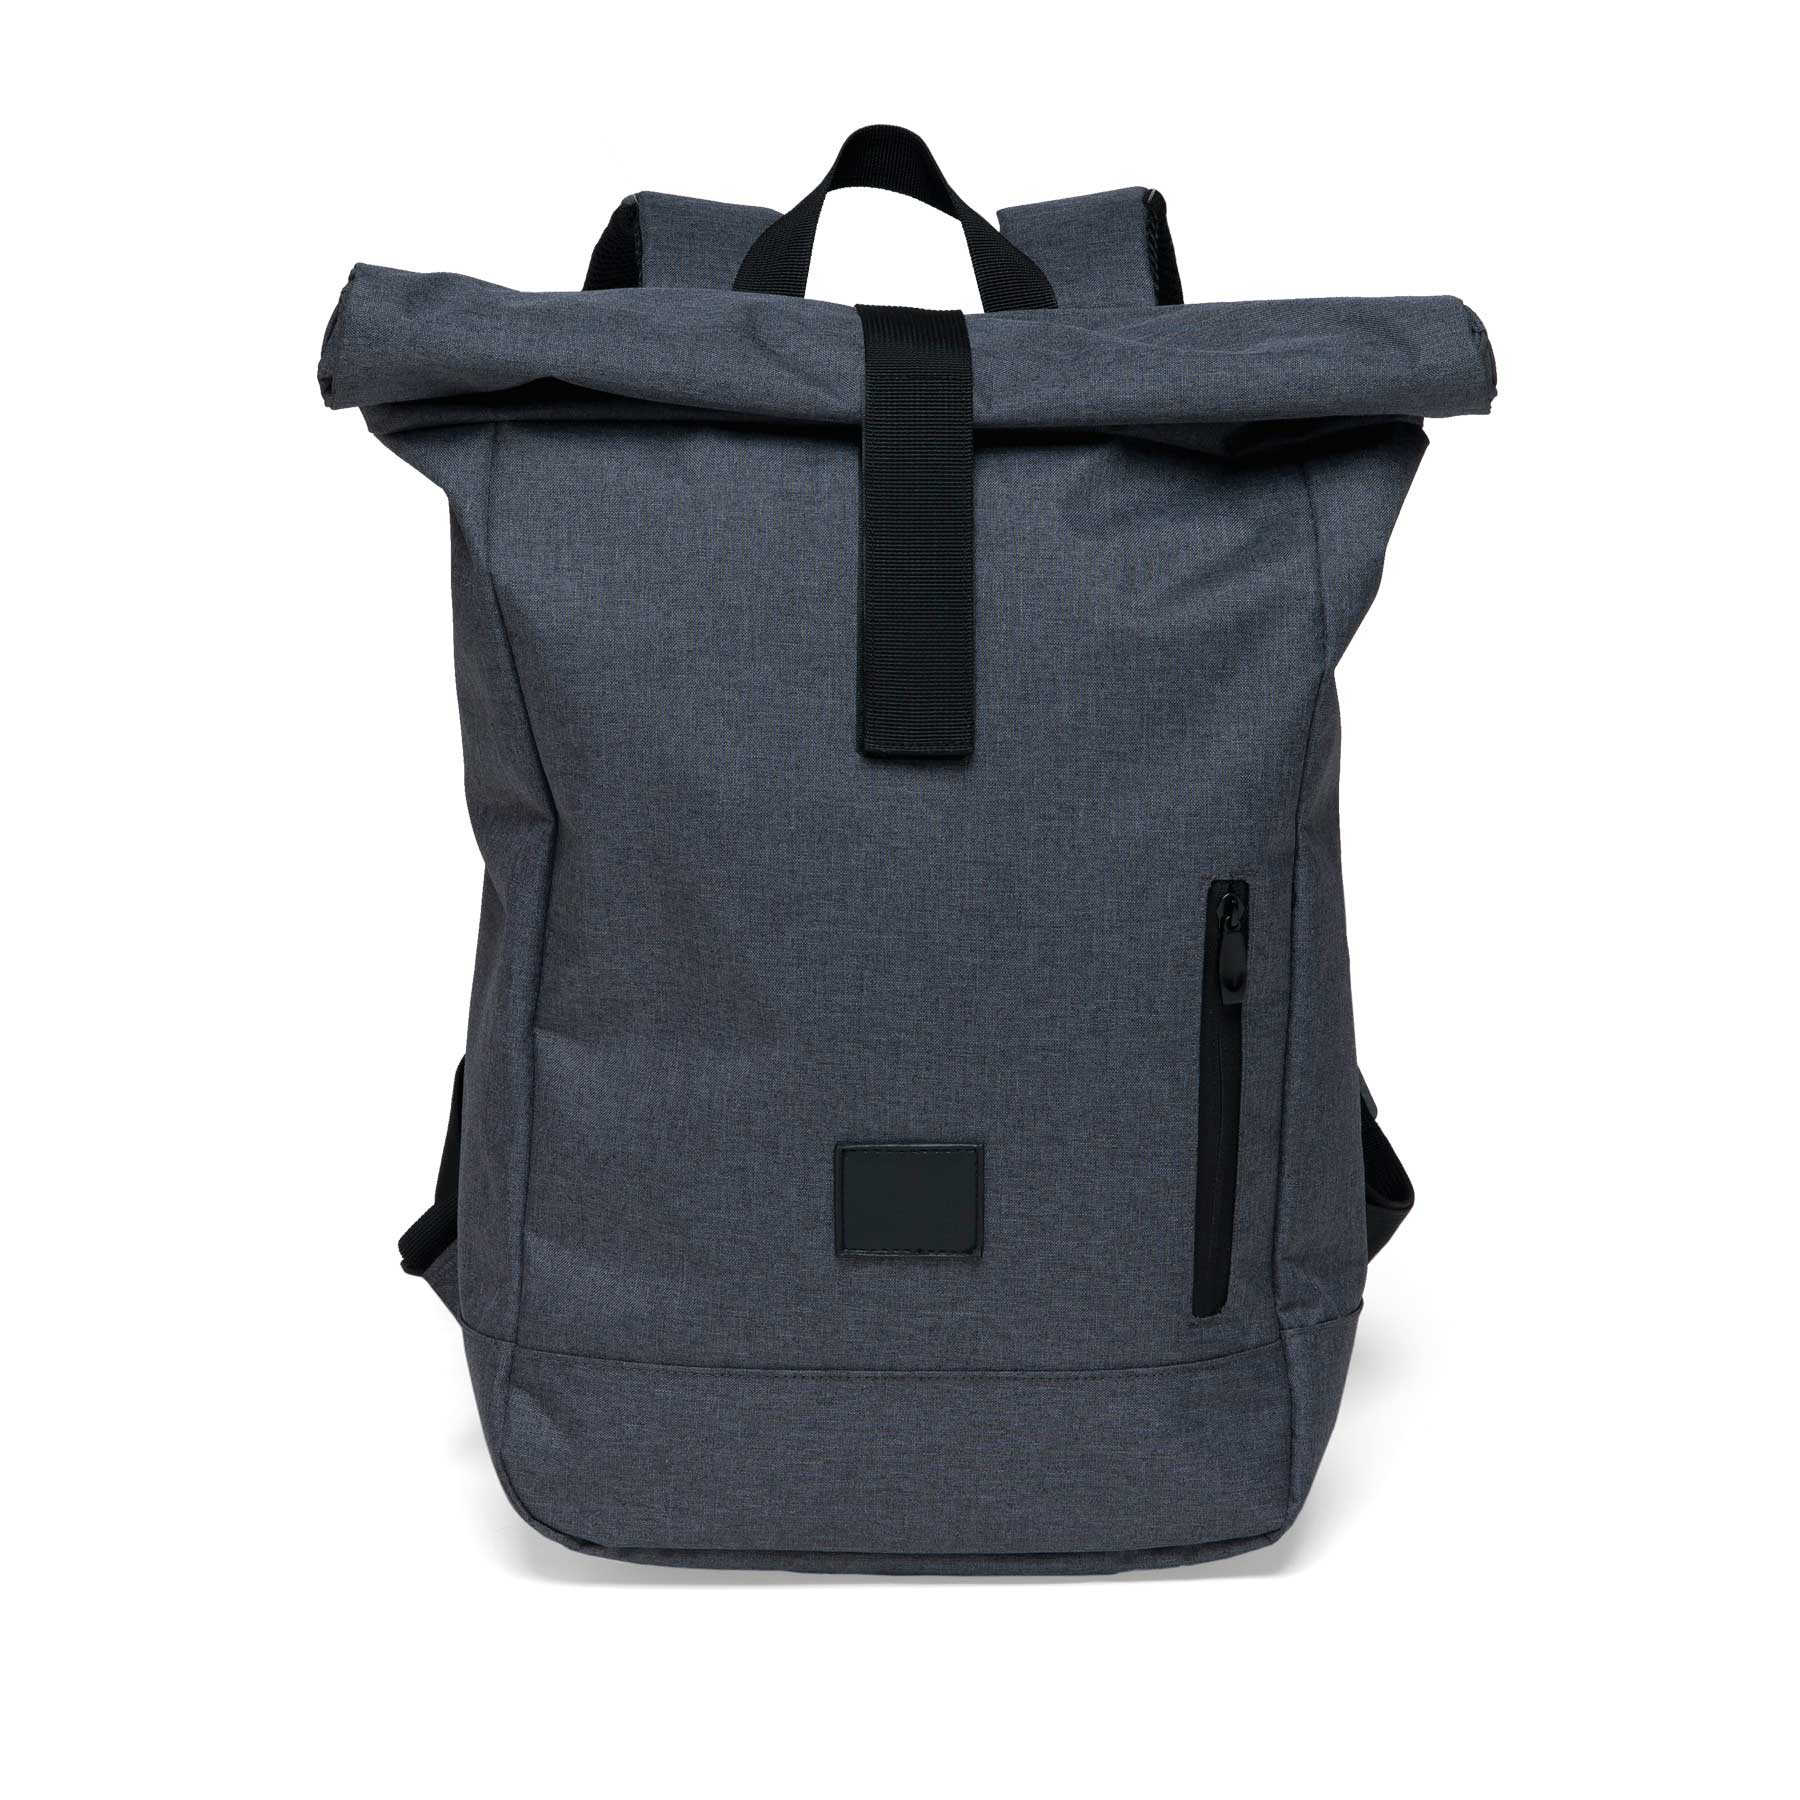 sibrtb-smpli-bounce-roll-top-backpack-front-2.jpg